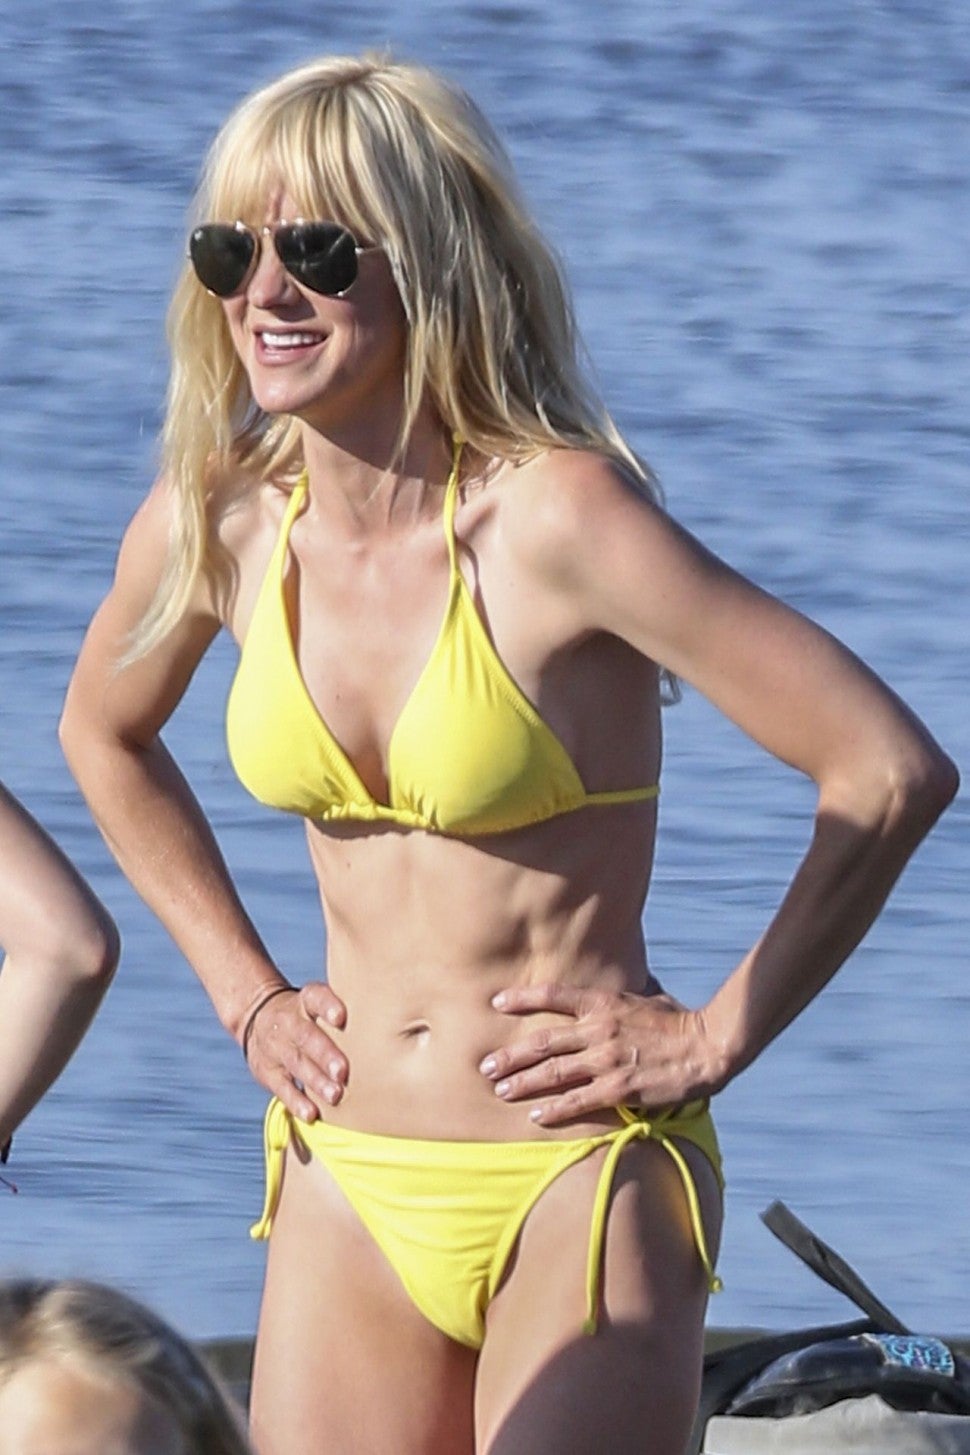 Anna Faris Shows Off Her Fit Figure in Tiny Yellow Bikini on ...